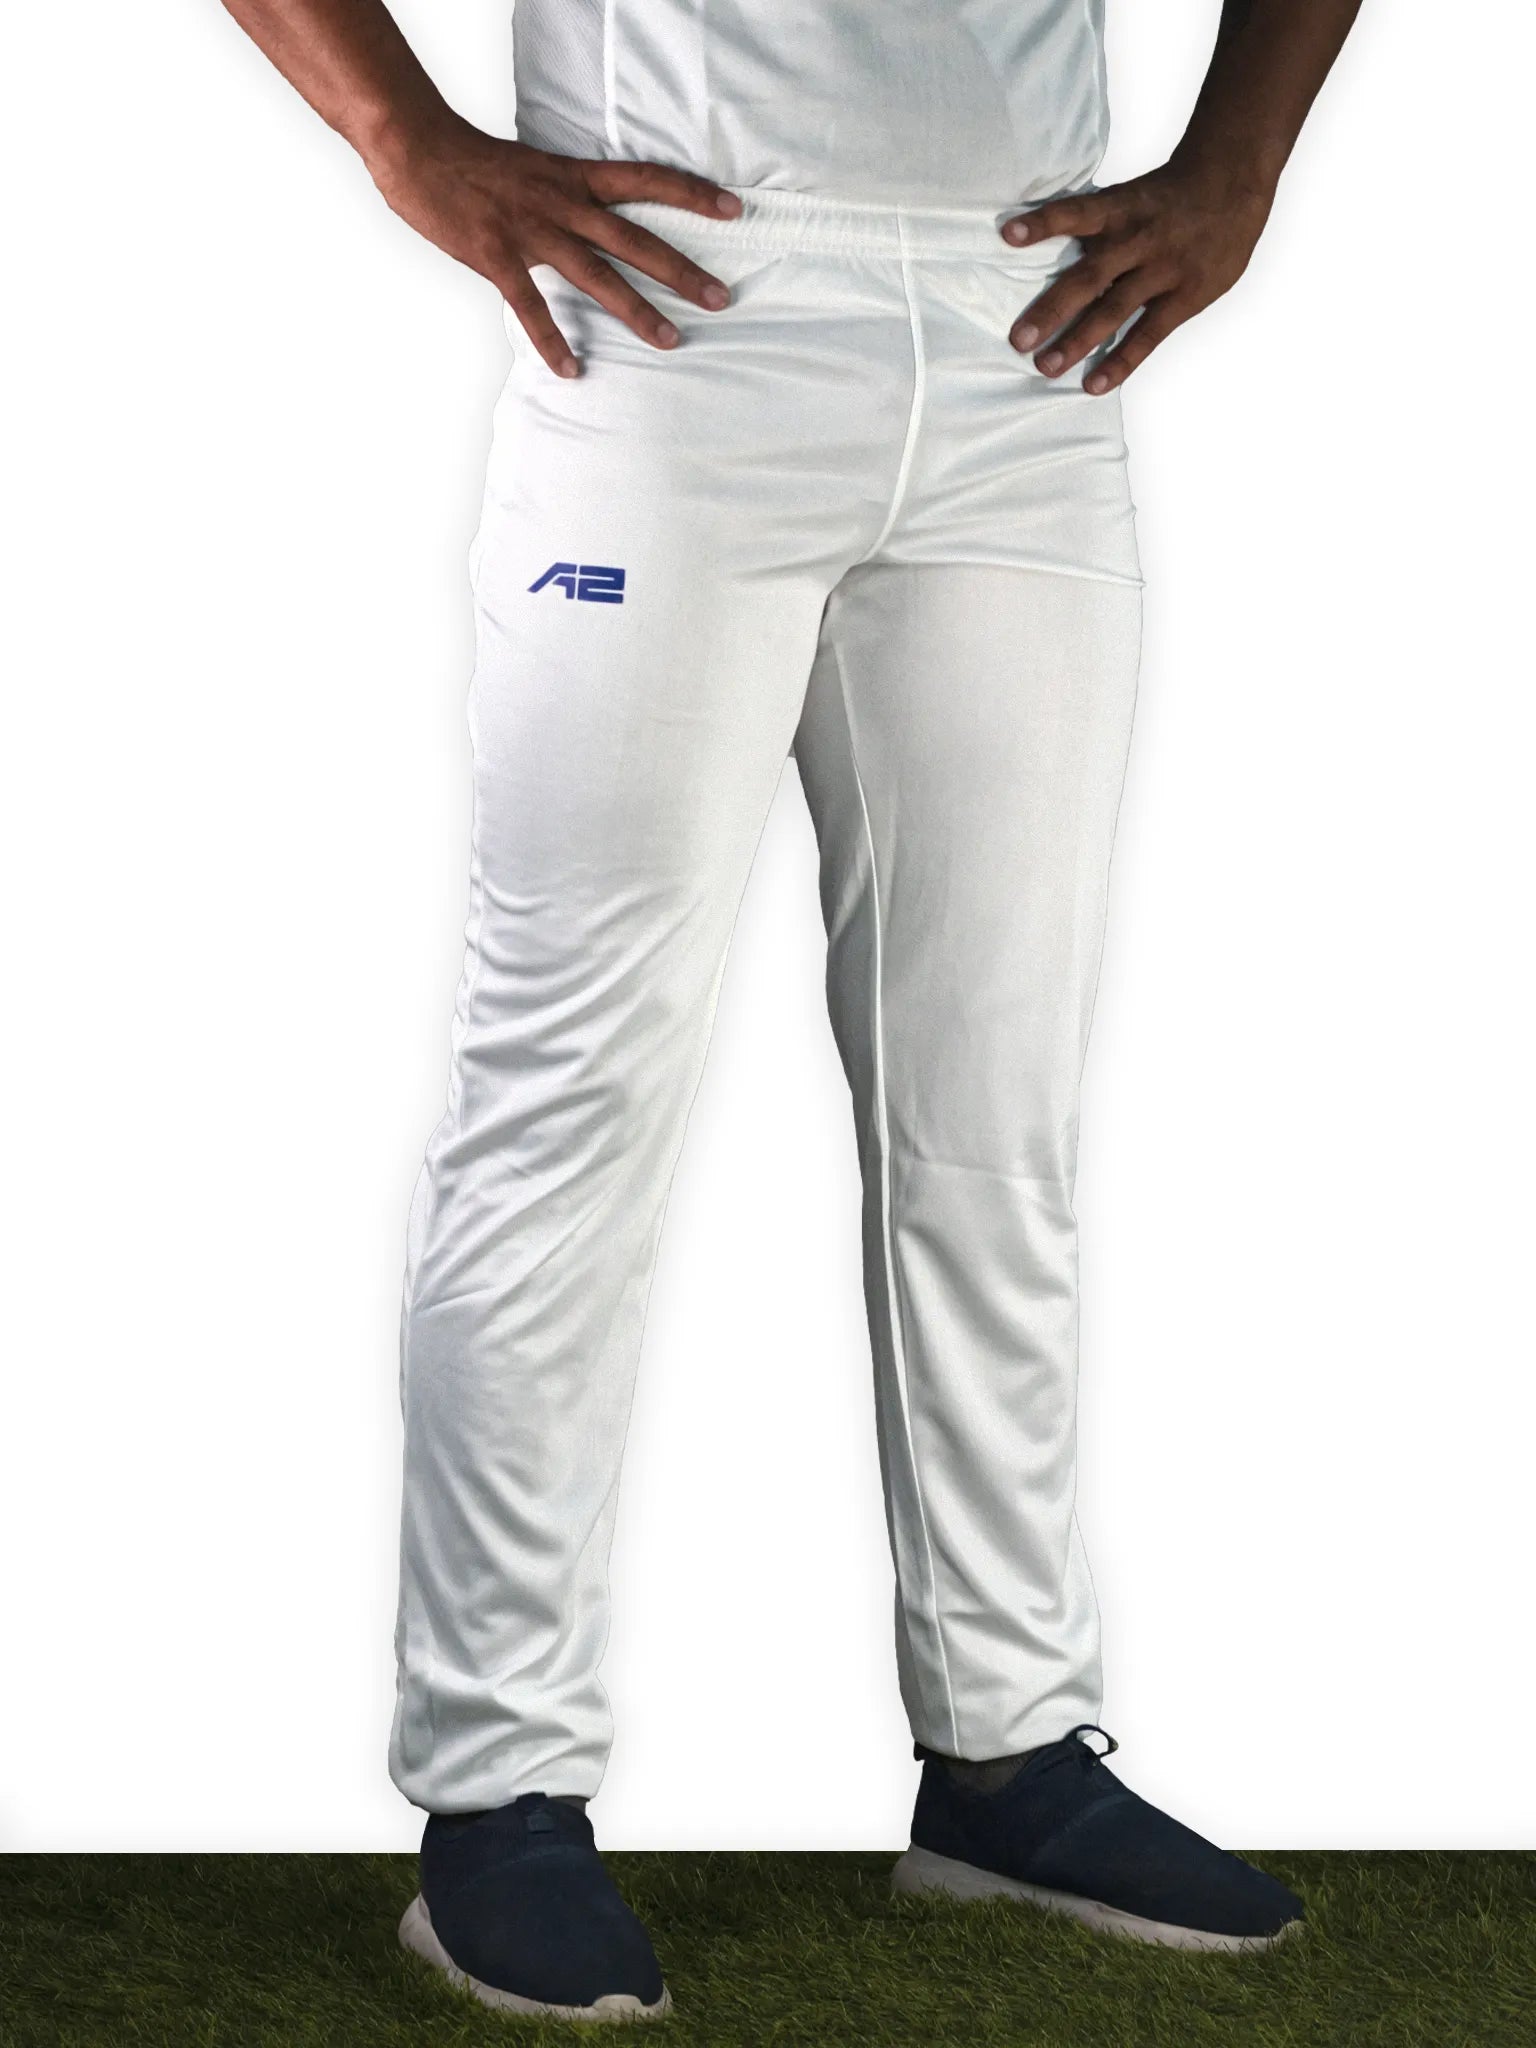 Puma Cricket Team Knit Pant 65705401 in Surat at best price by Sangita  Garment  Justdial